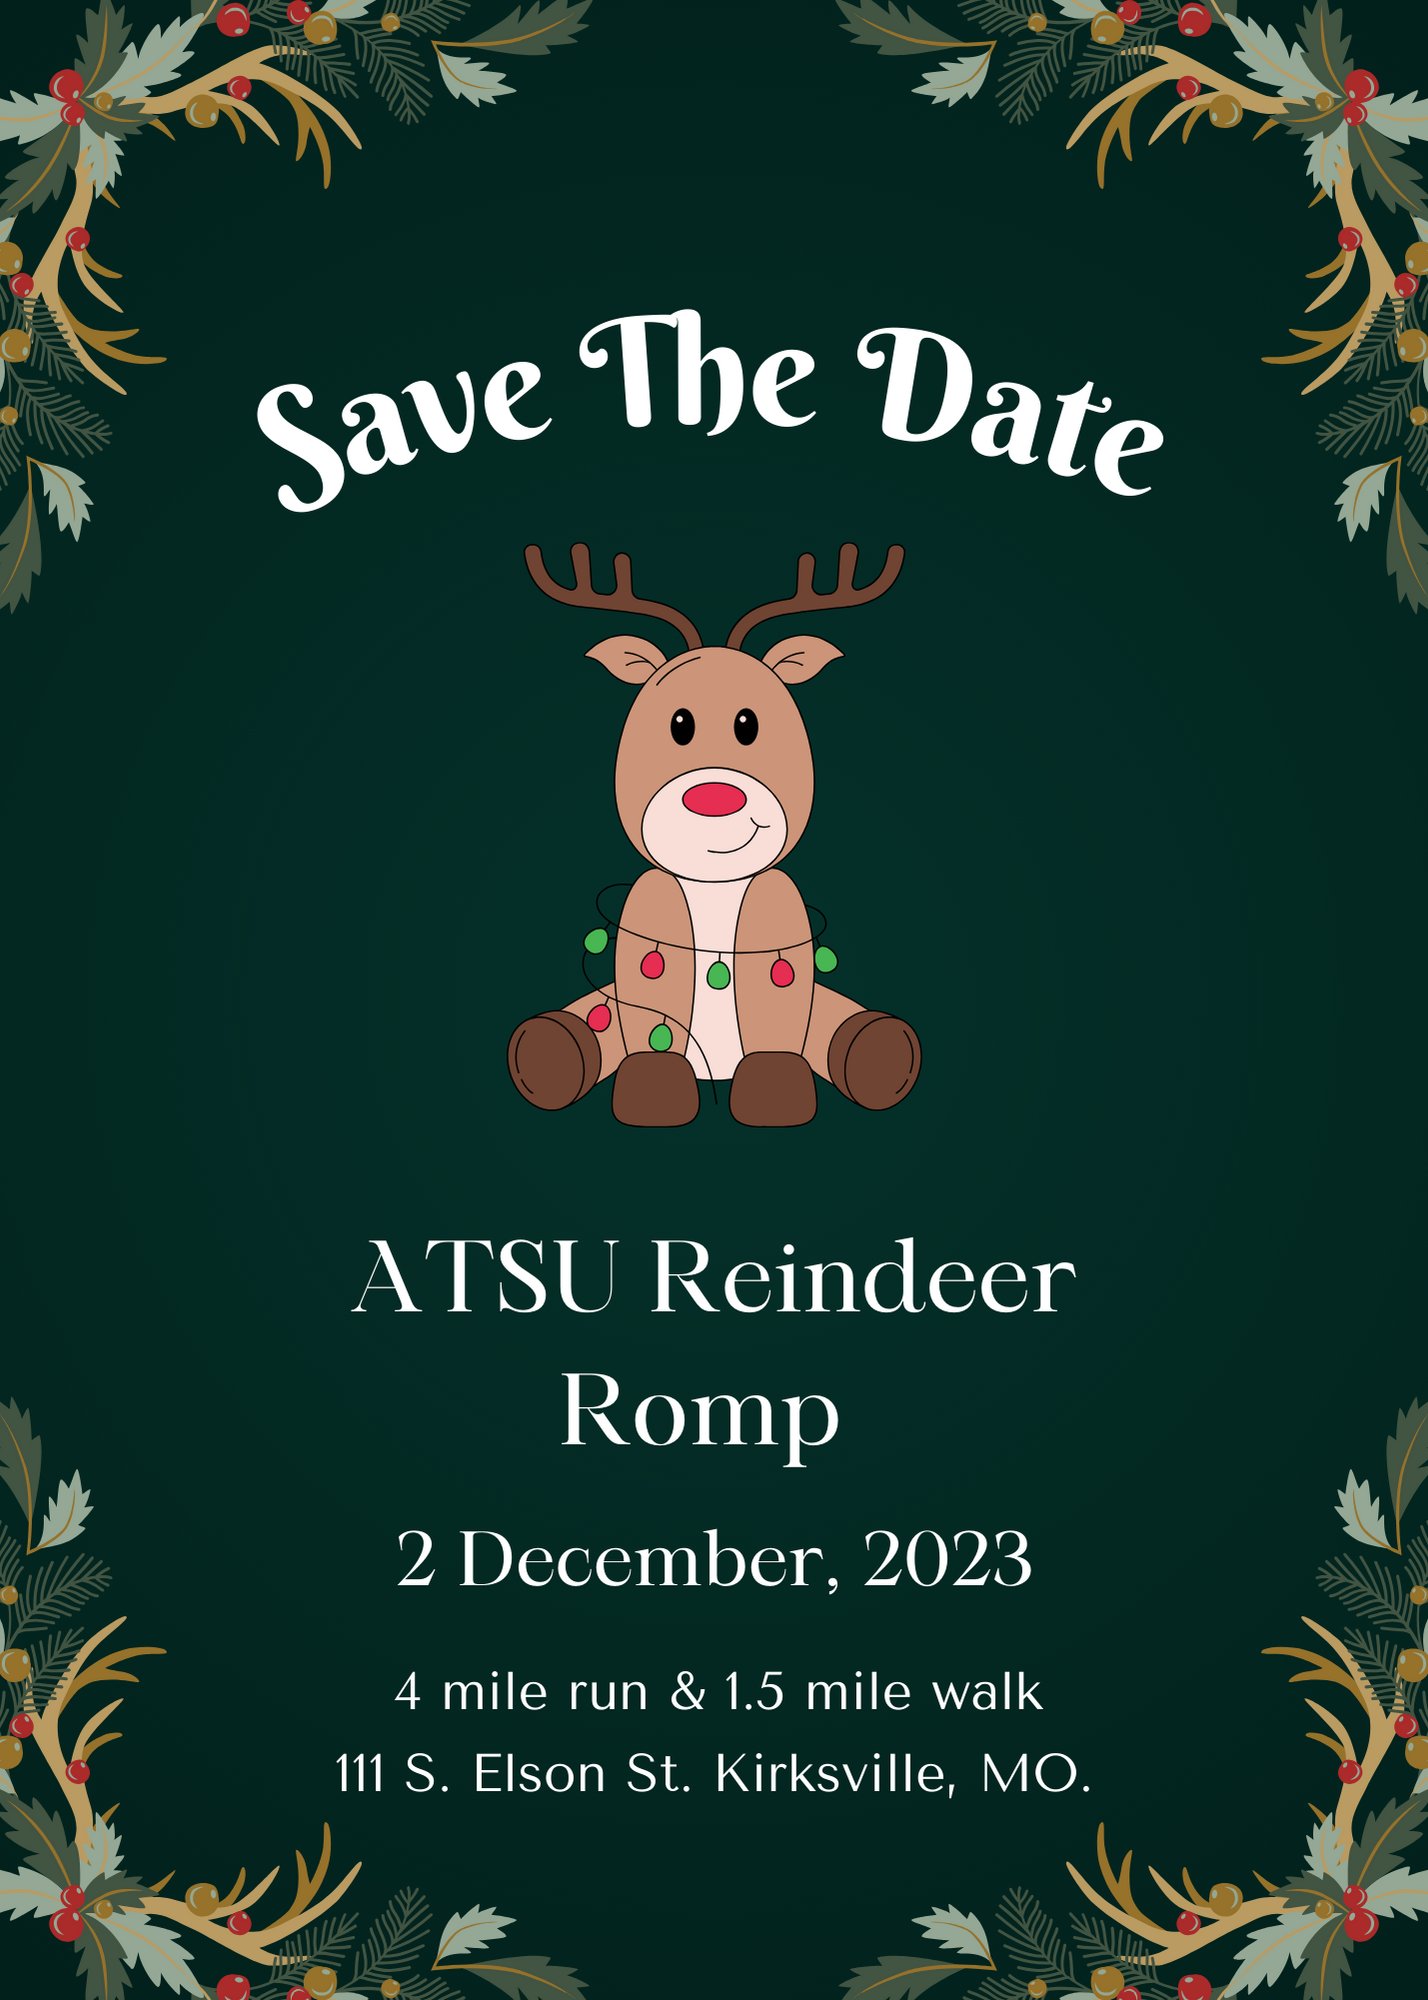 Check more about ATSU Reindeer Romp Run